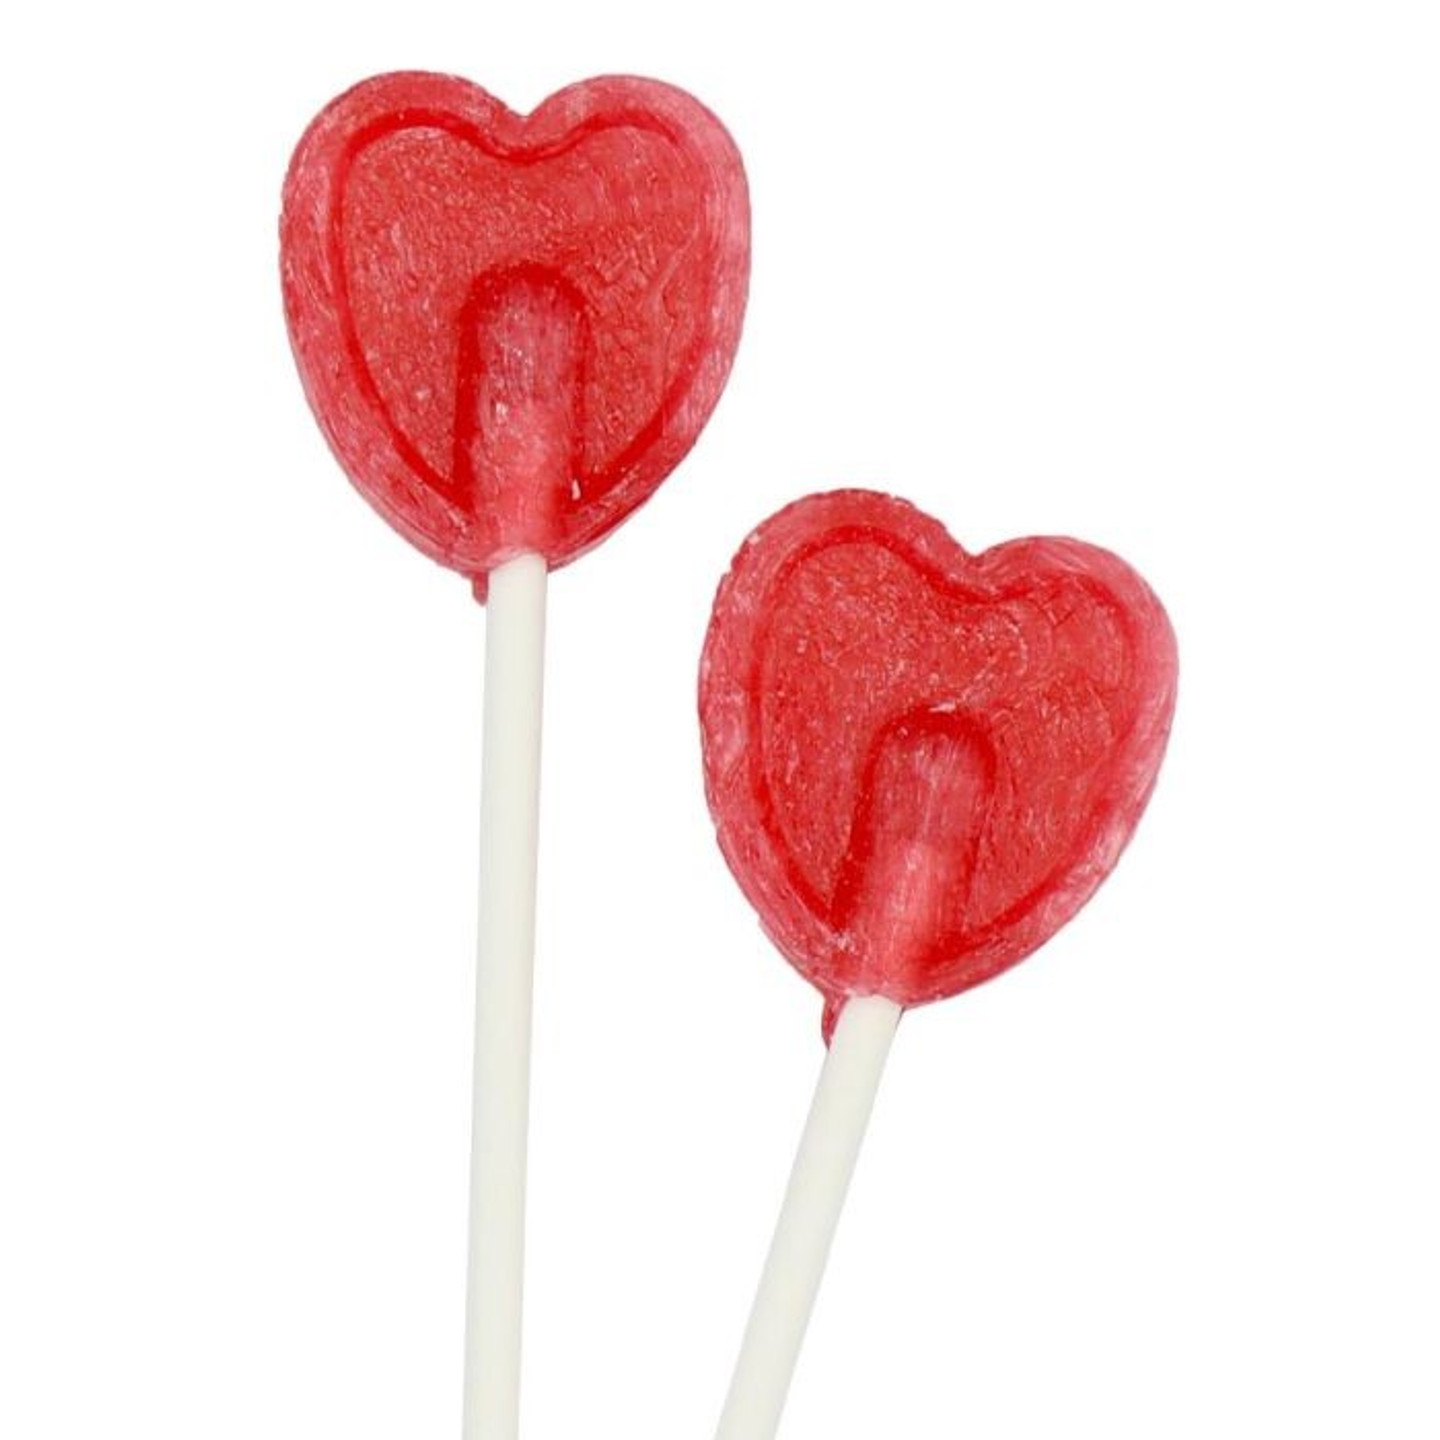 Cherry Heart Shaped Lollipops 5.2g